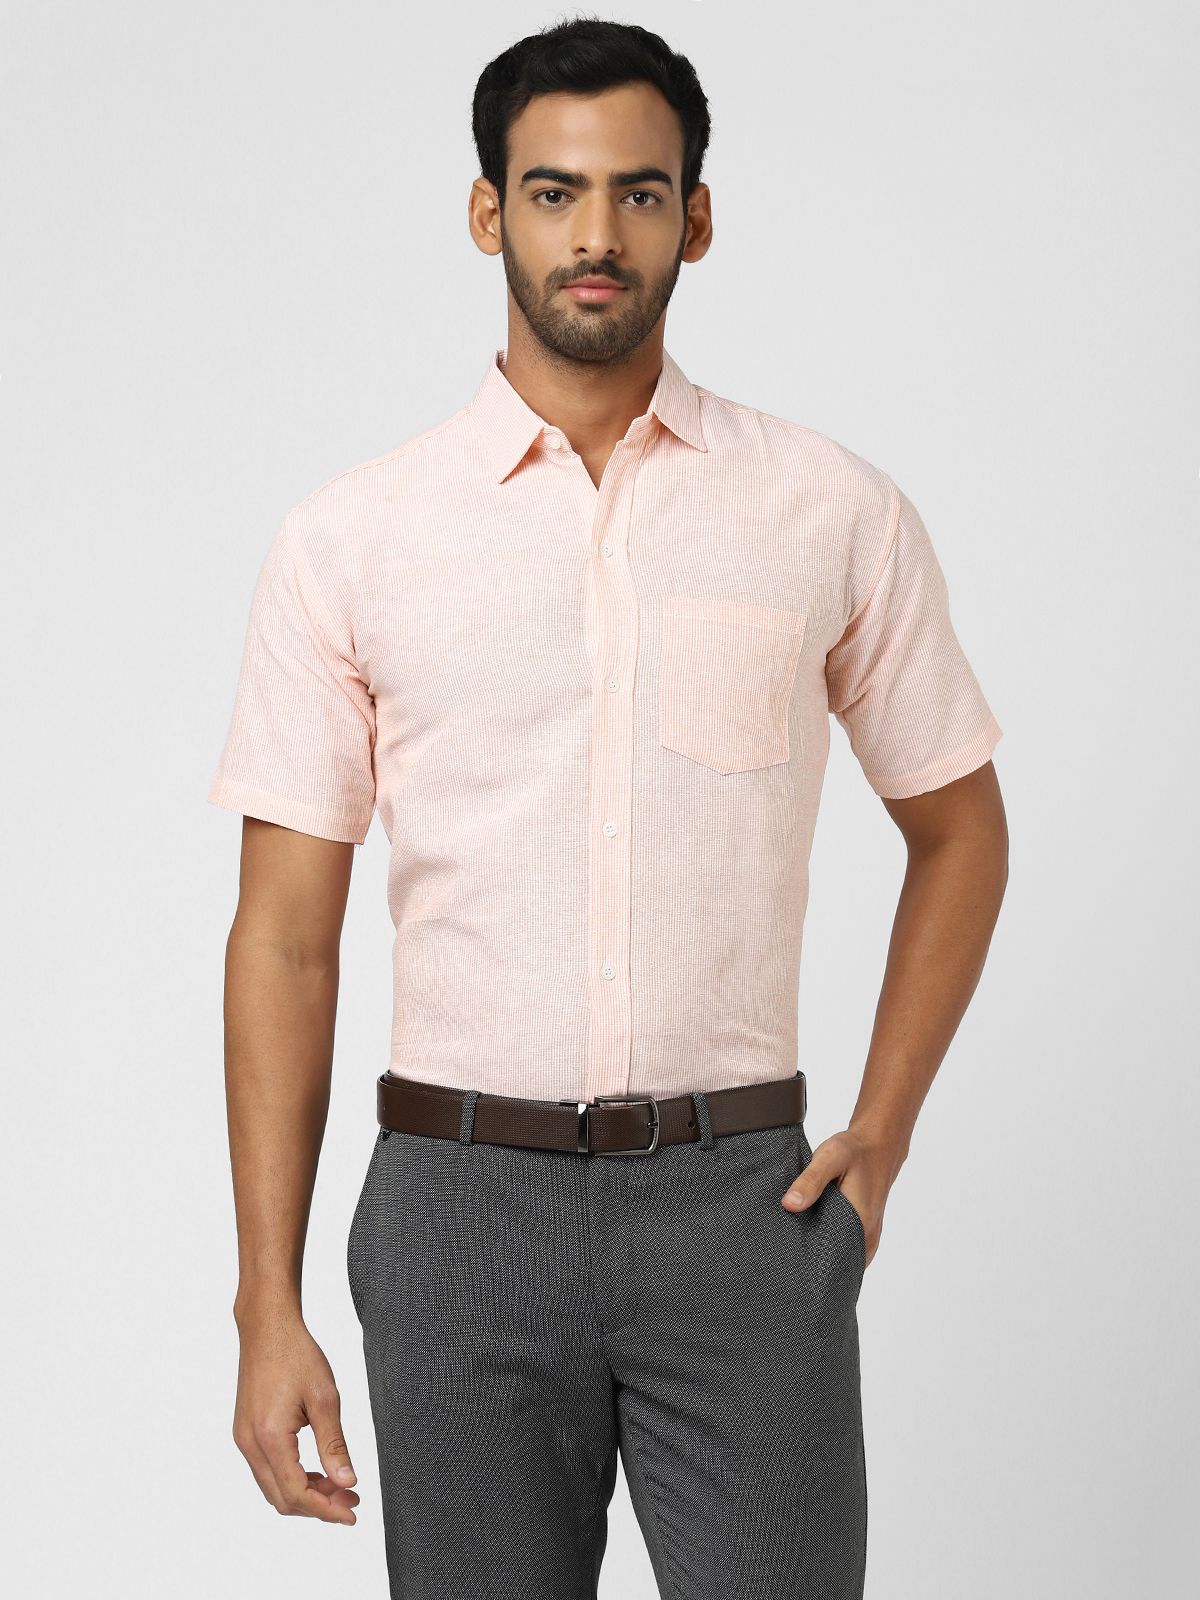     			DESHBANDHU DBK - Pink Cotton Regular Fit Men's Casual Shirt (Pack of 1 )